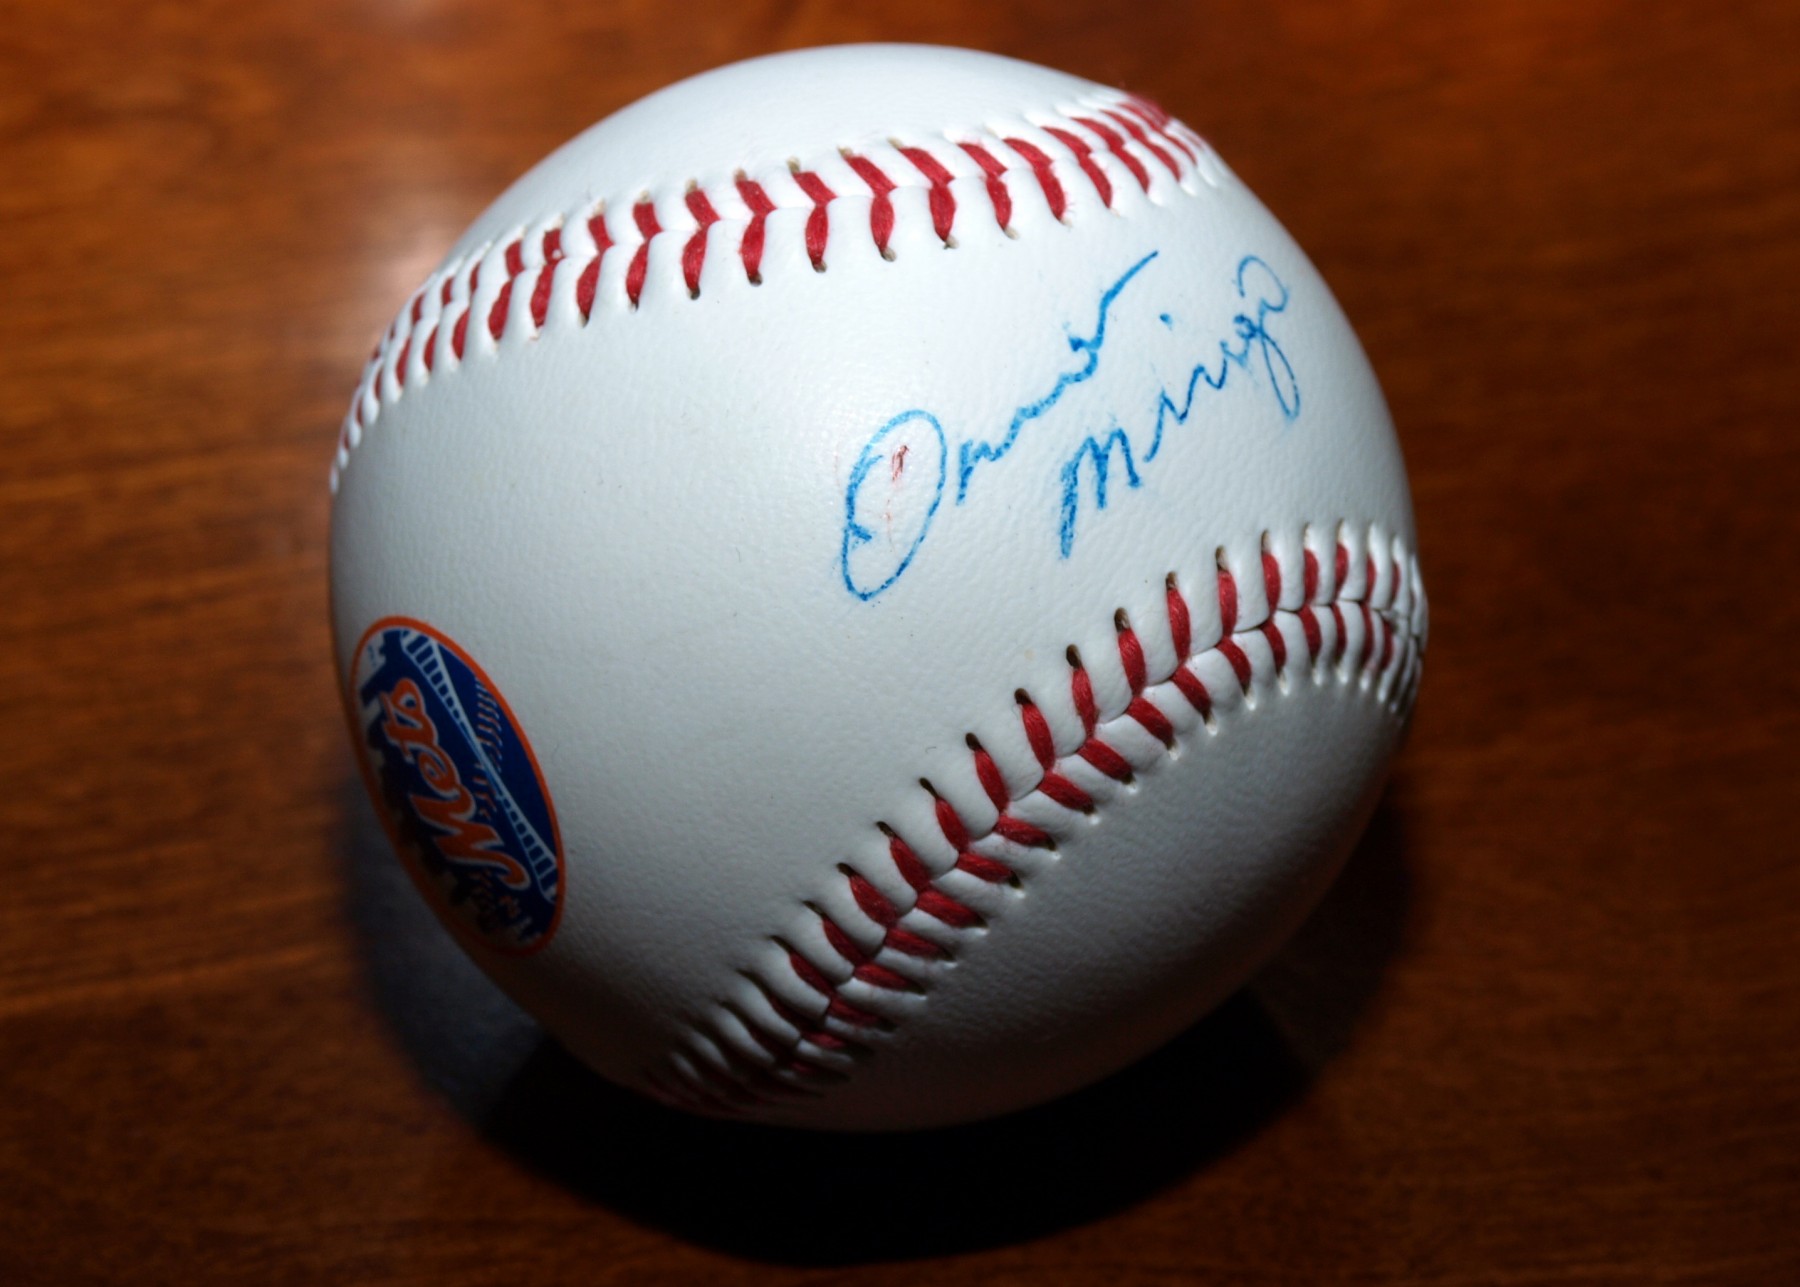 MetsPolice Omar Minaya Autographed Ball